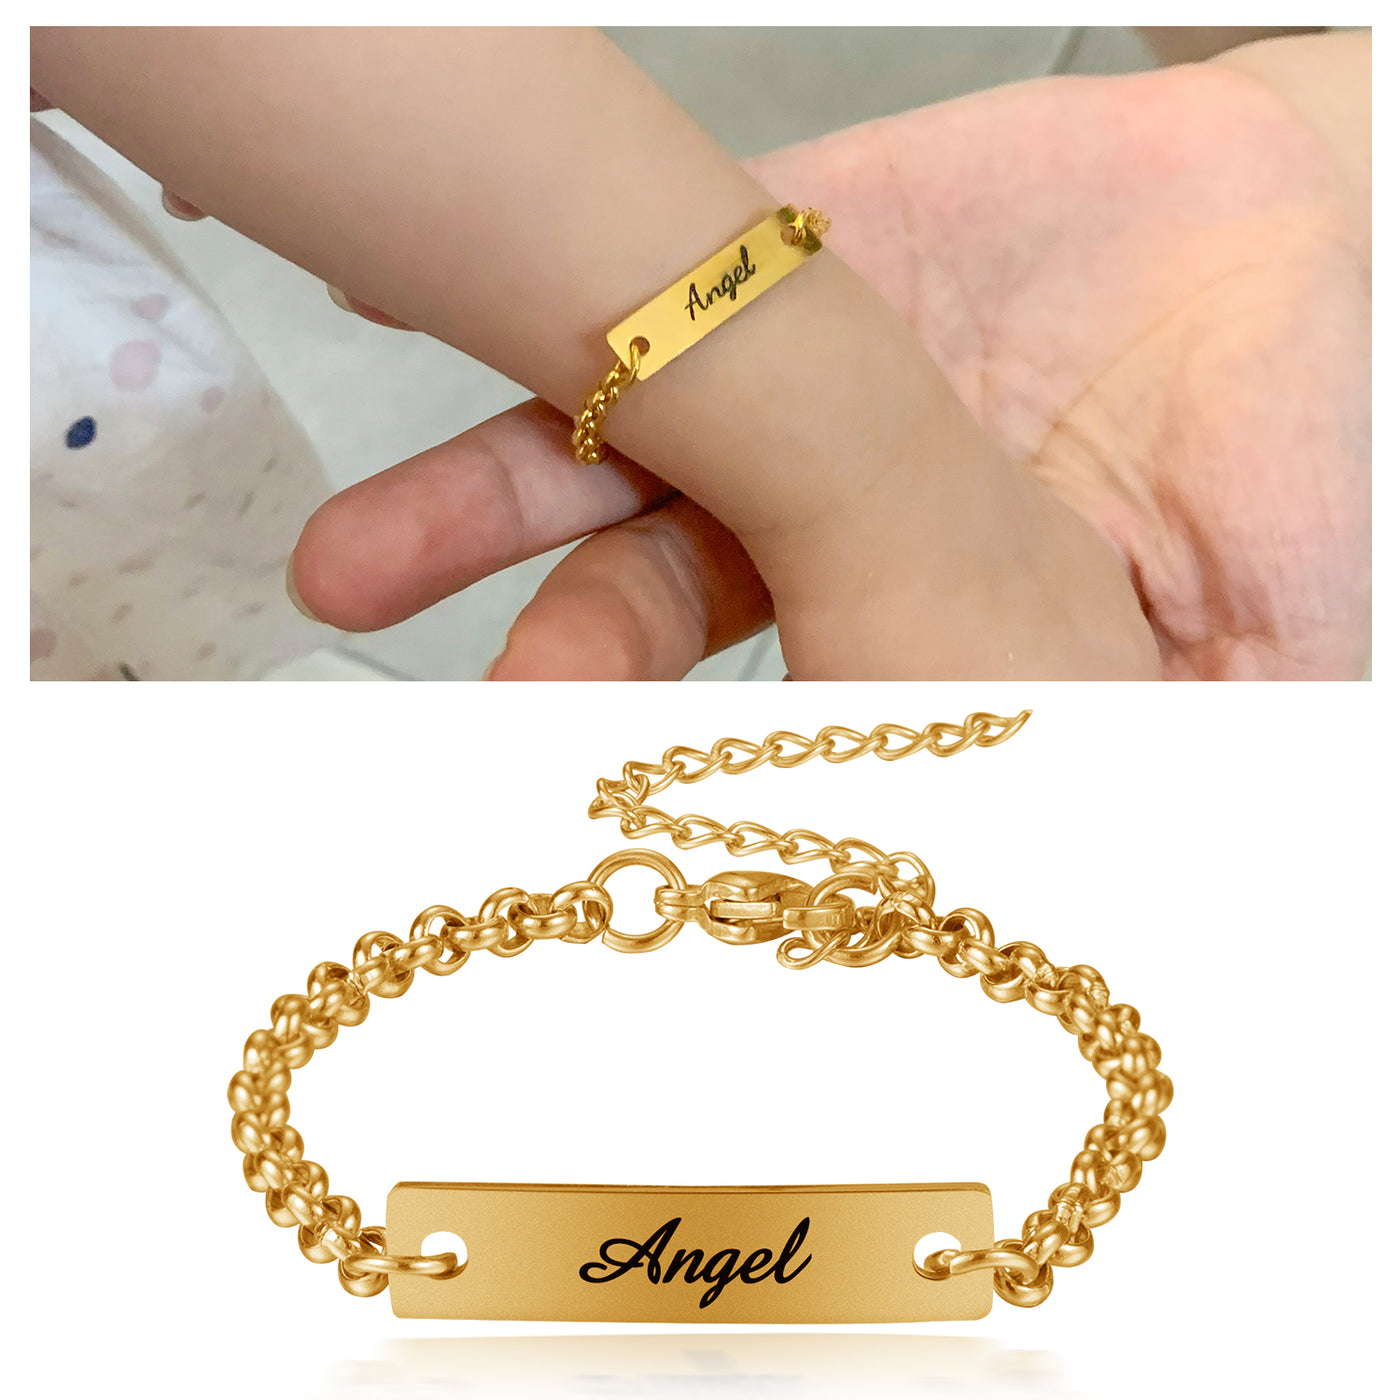 Personalized Custom Baby Bracelet